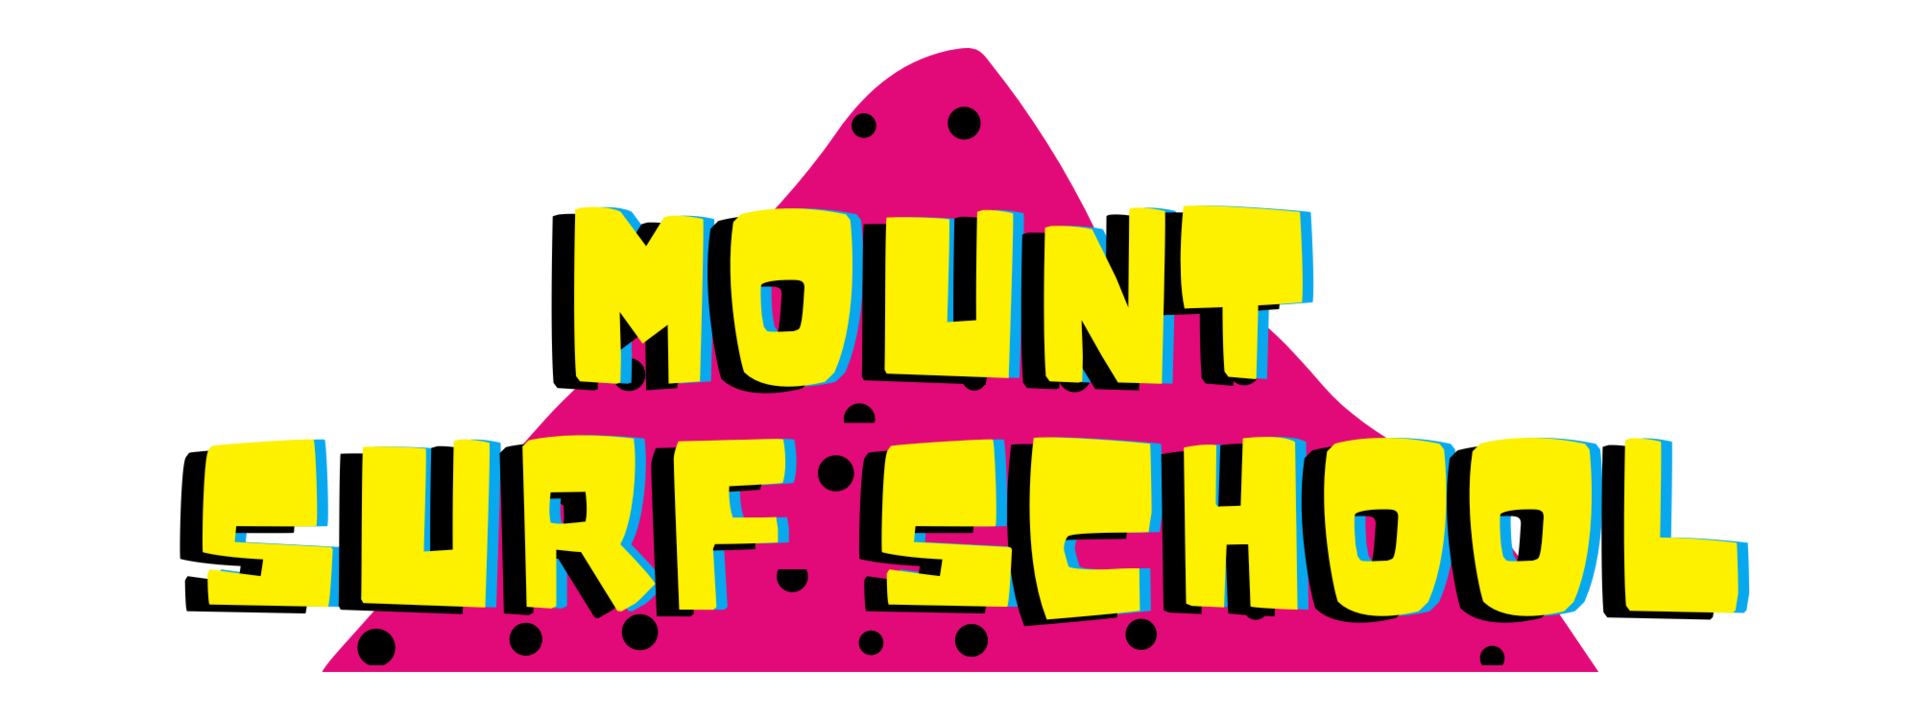 Mount surf school logo big.png